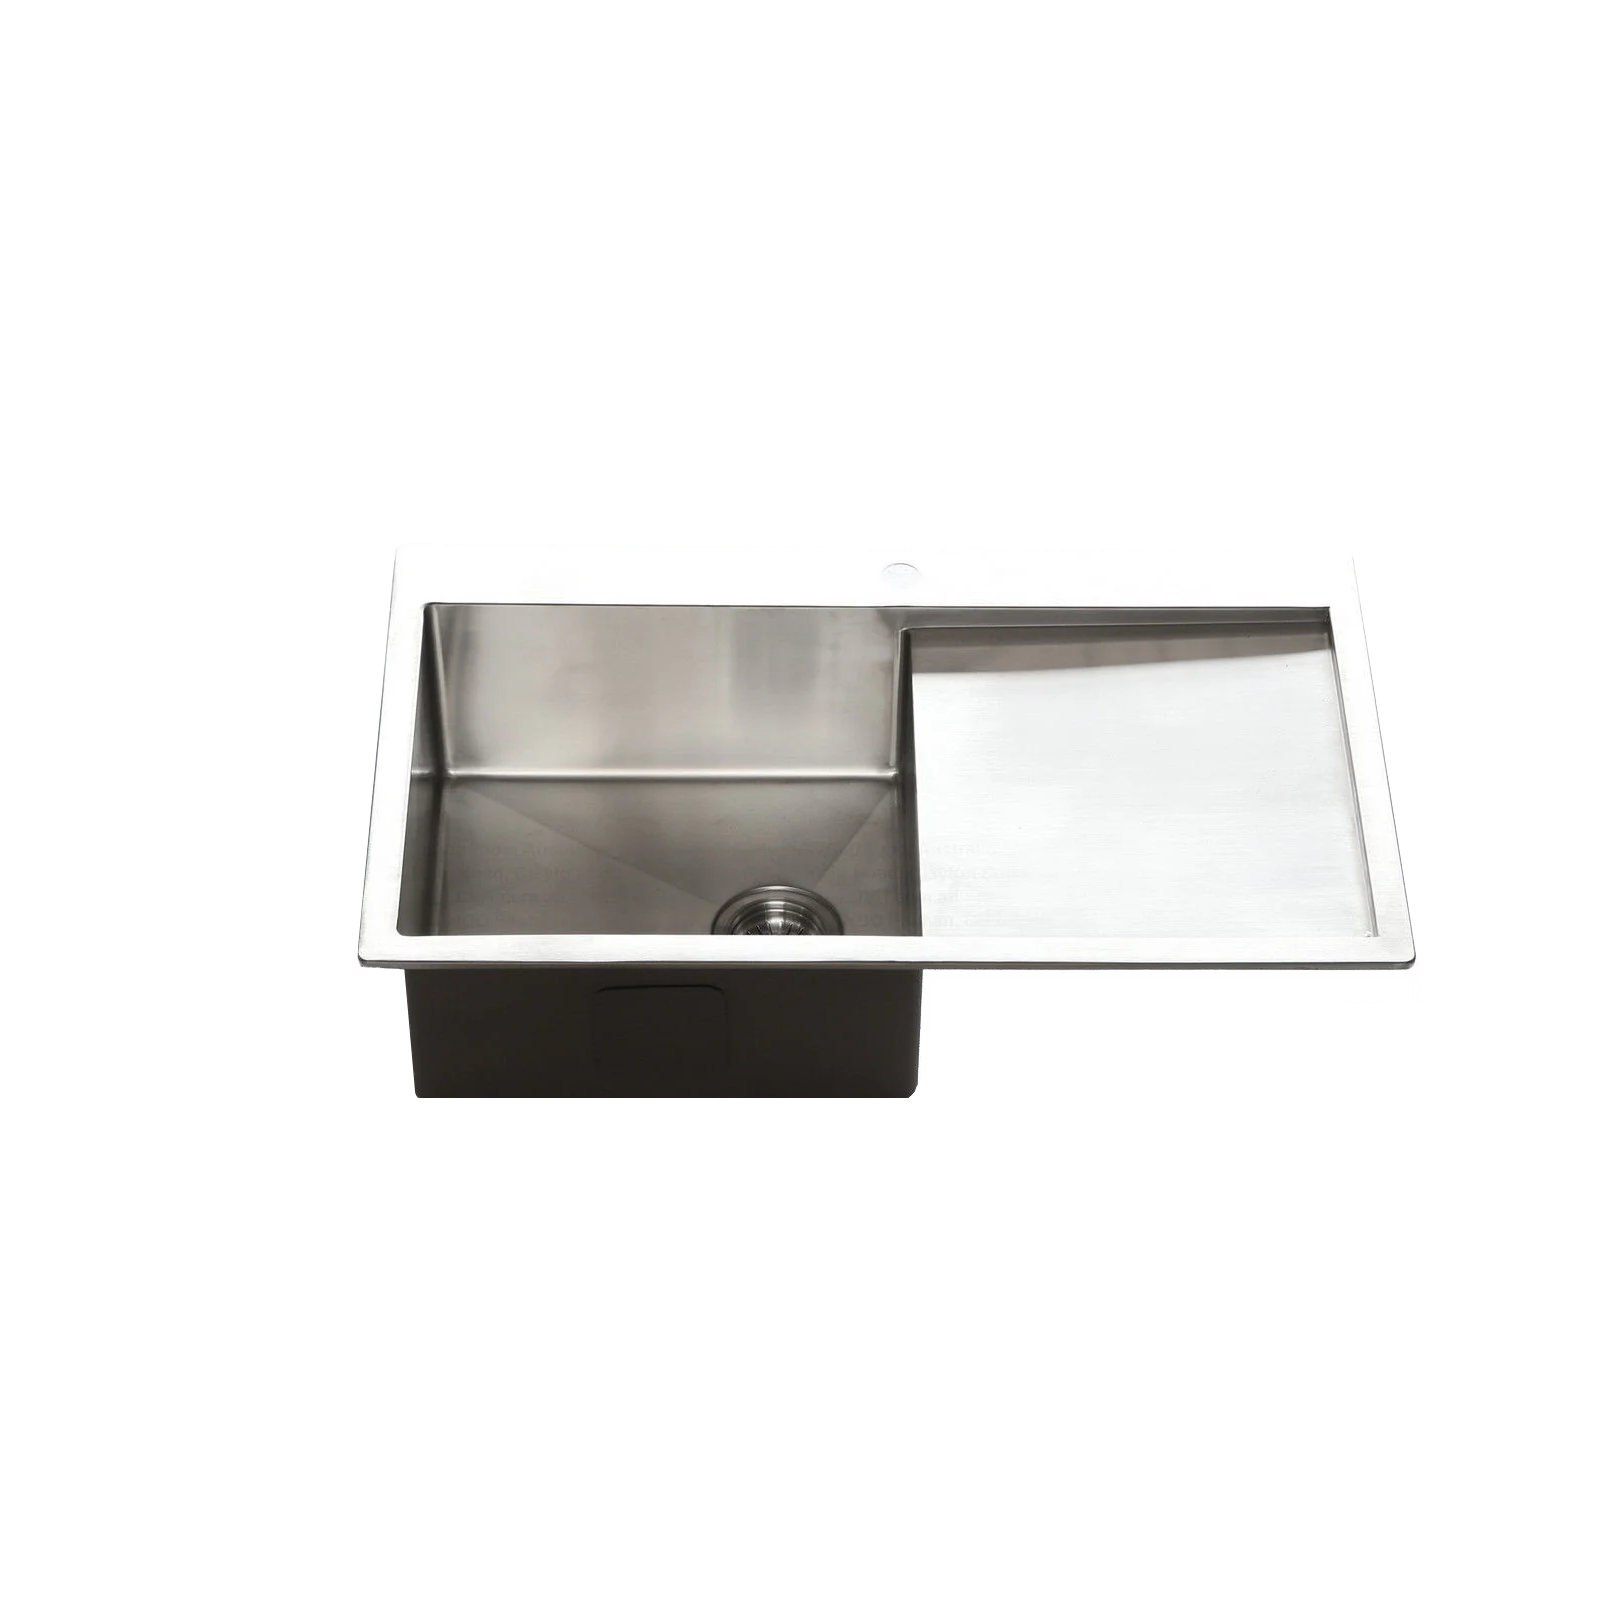 Kitchen sink-304 stainless steel-865*510*220-10mm radius corner-1.2mm thickness